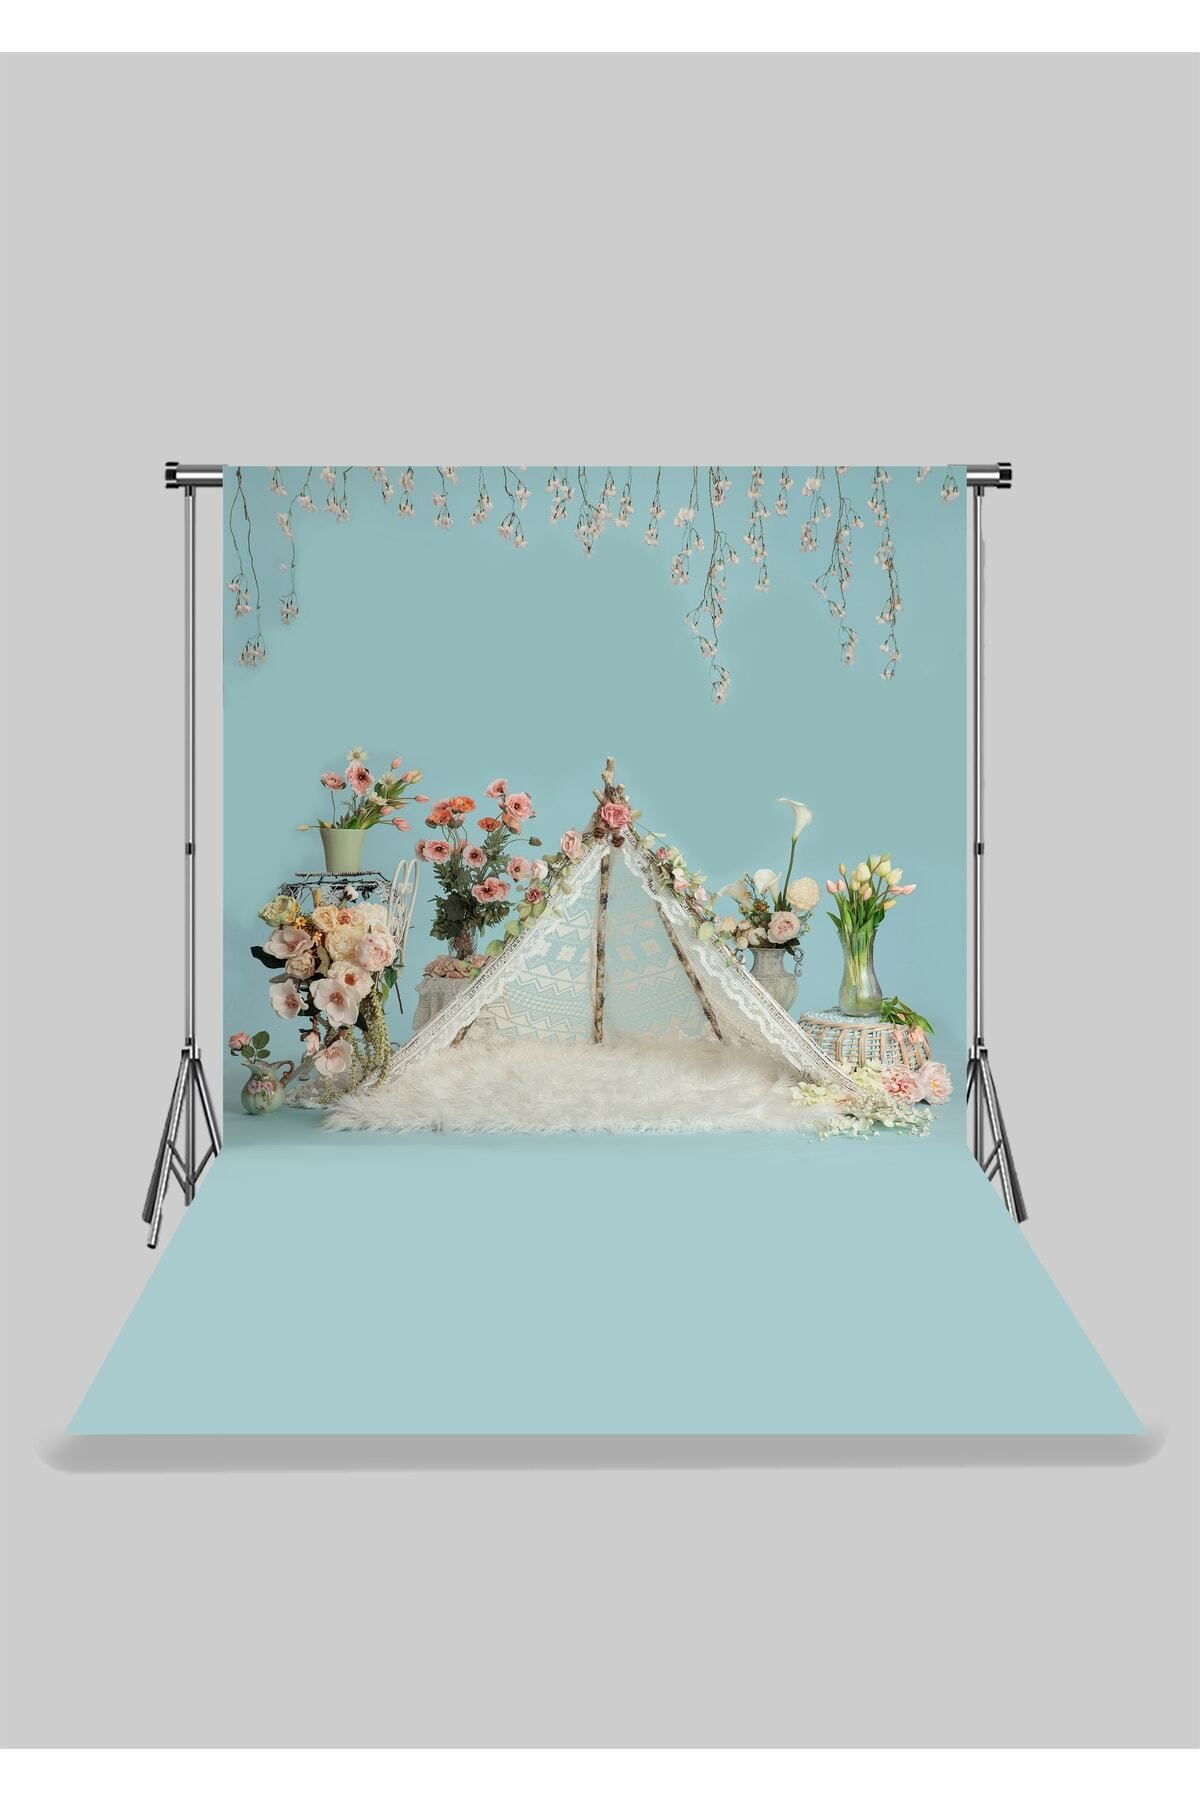 FONHANE 2x2.5 Mt Kumaş Çocuk Stüdyo Fonu - Mavi Zeminli Bahar Çiçekli Beyaz Çadır